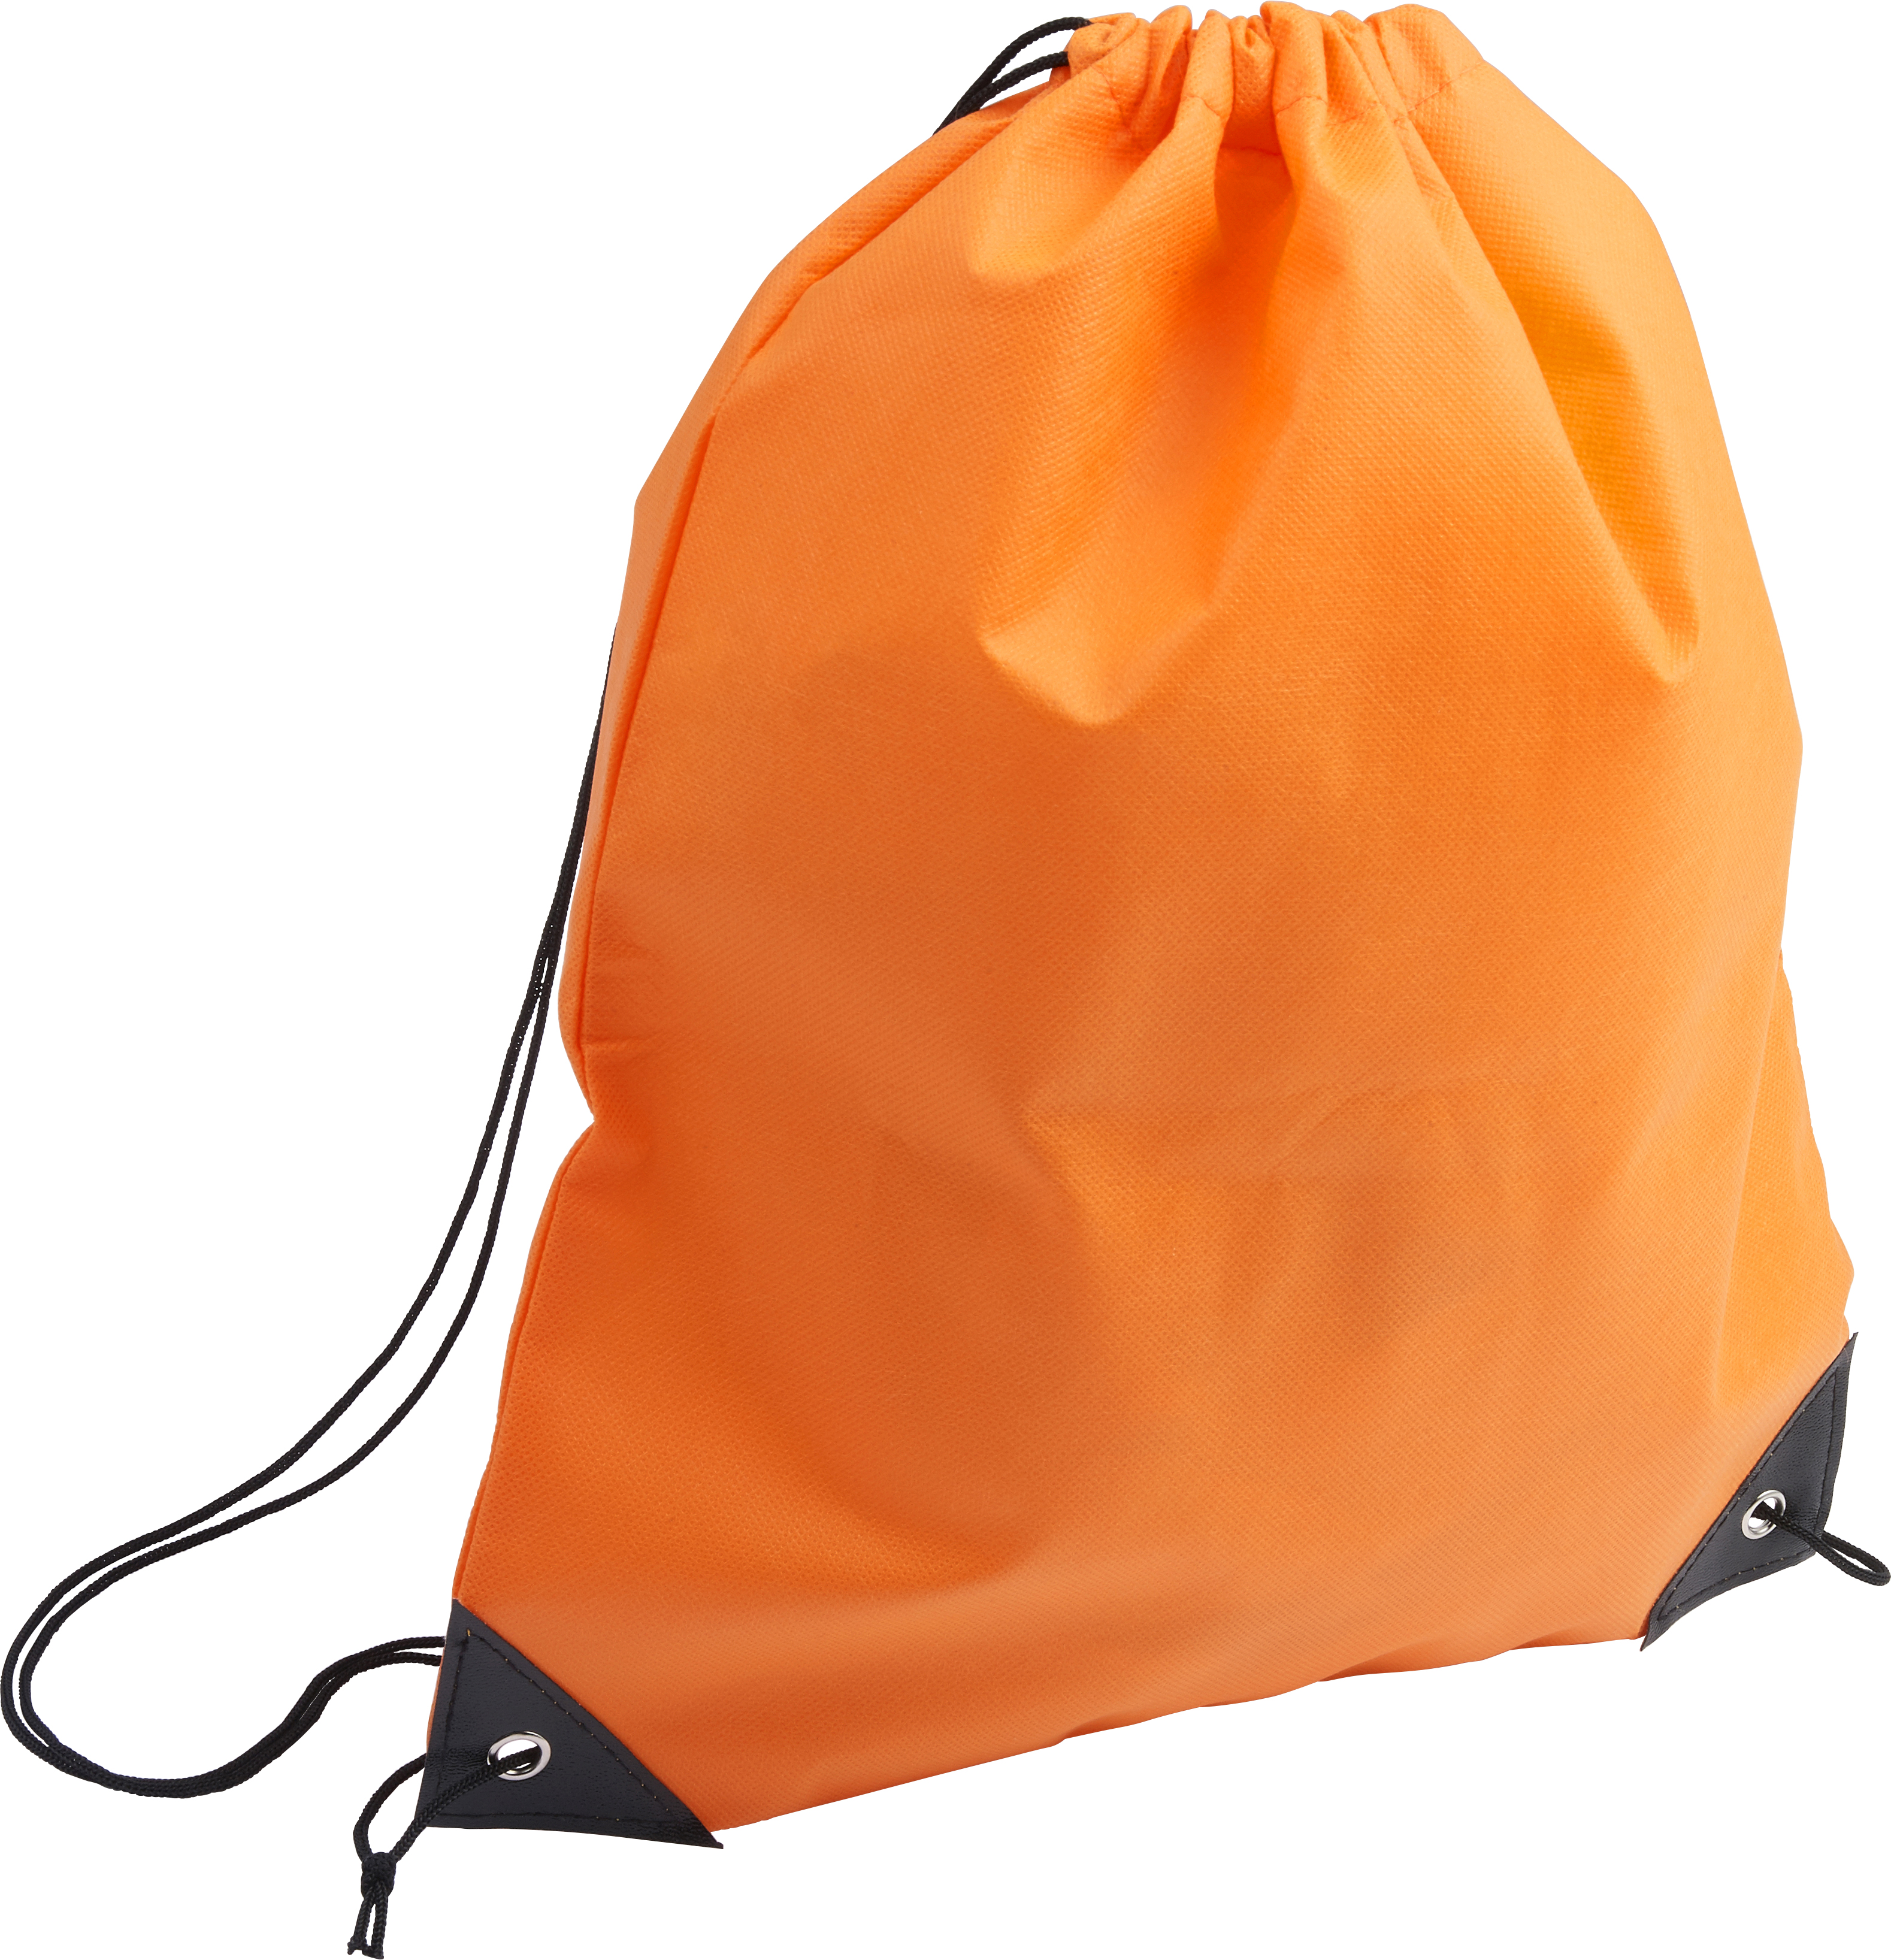 008692 007999999 3d045 rgt pro01 fal - Value Drawstring backpack